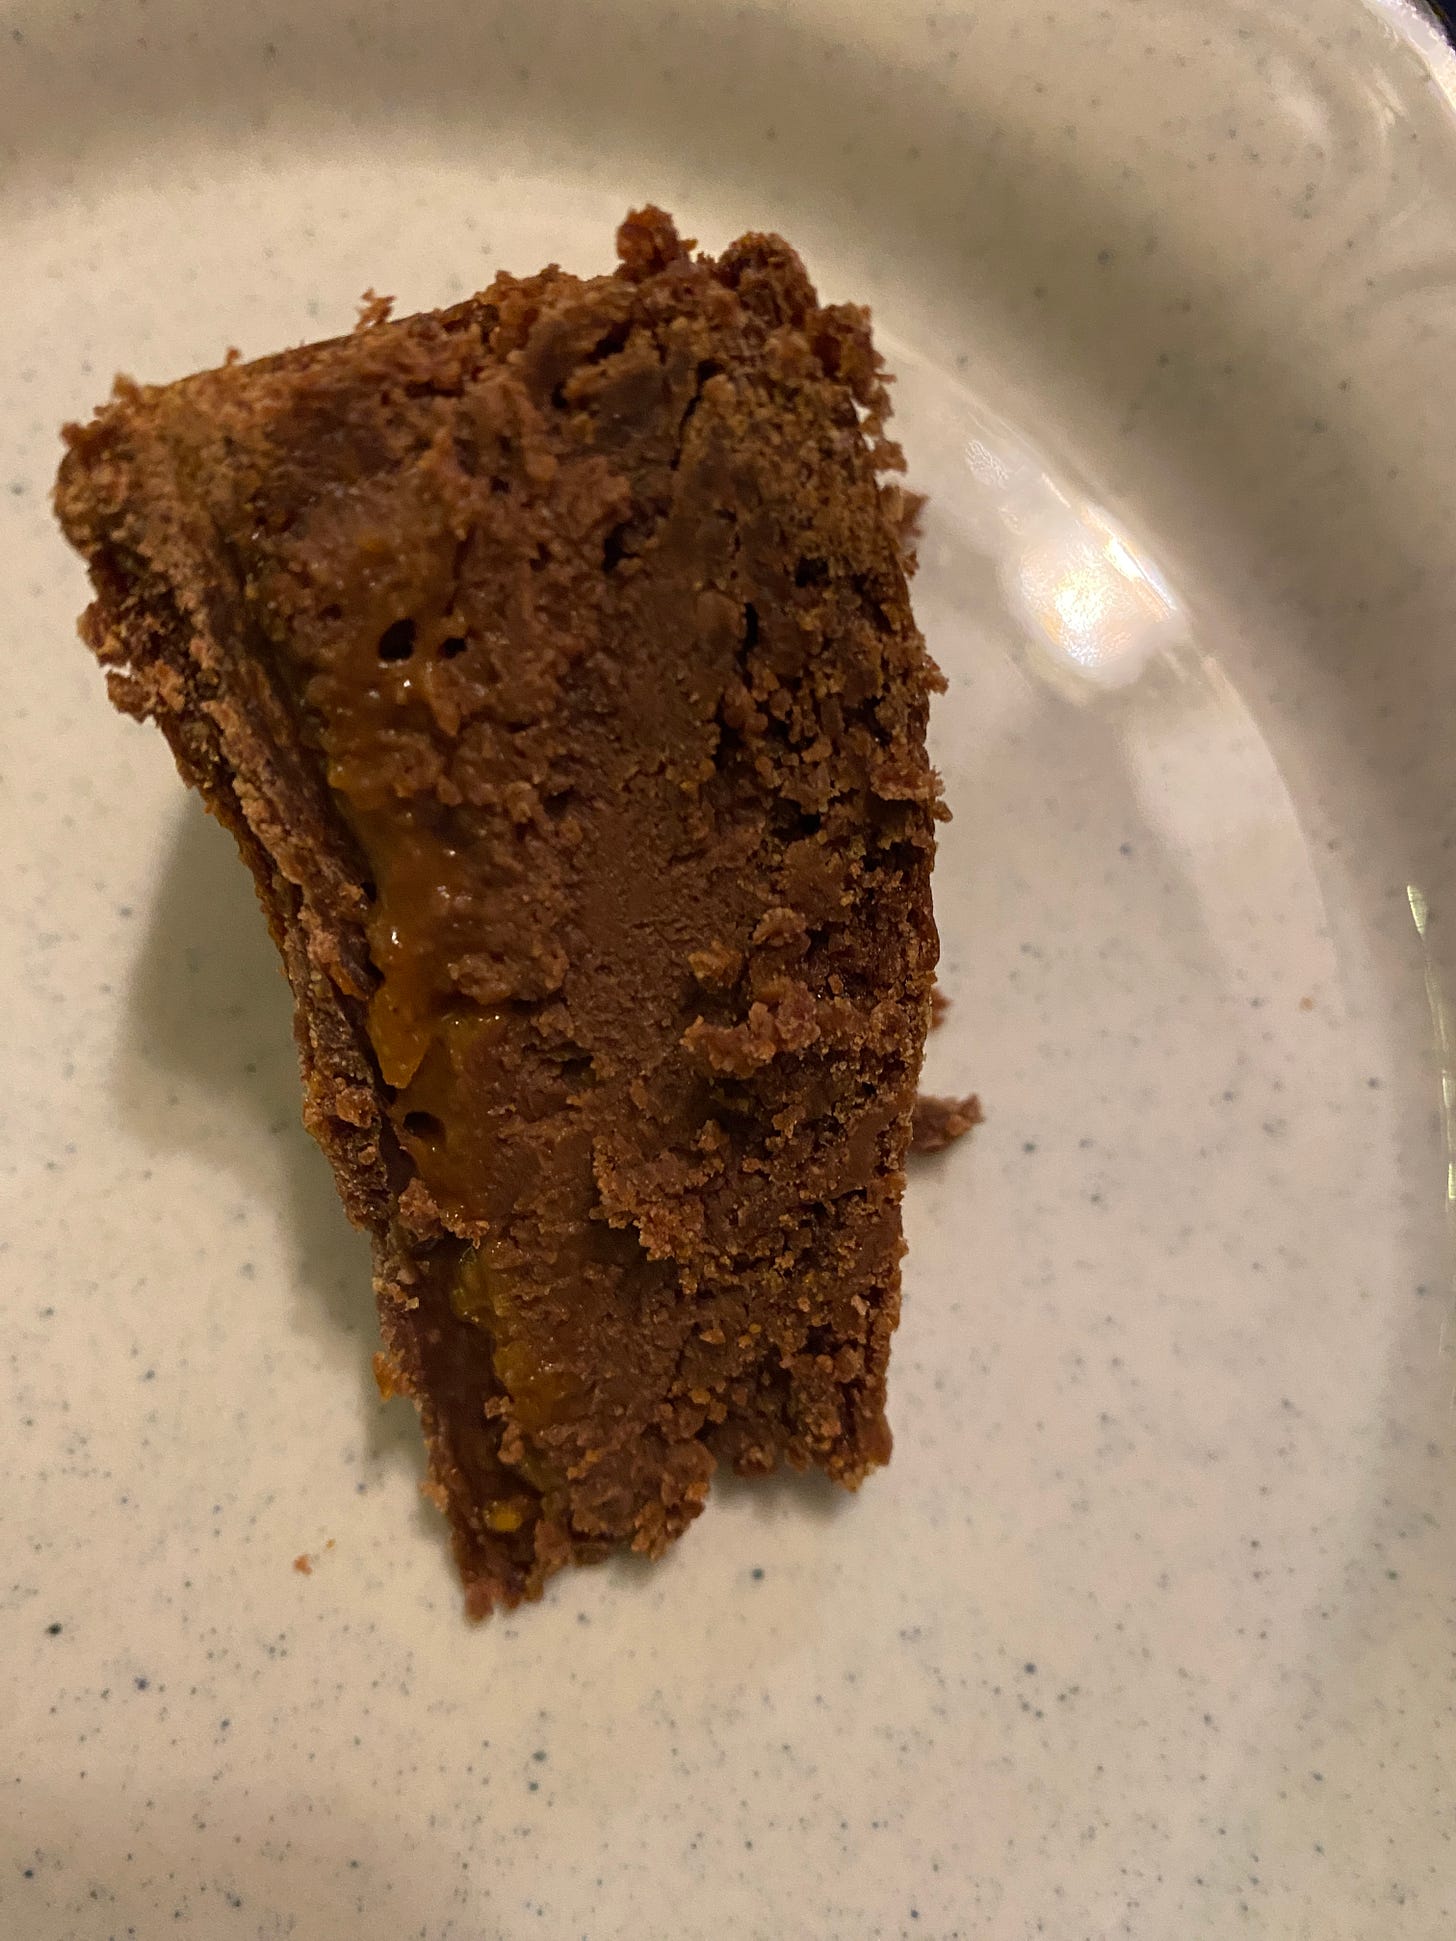 A slice of chocolate cake, called Chocolate Candied Orange Gâteau, on a white flecked plate.